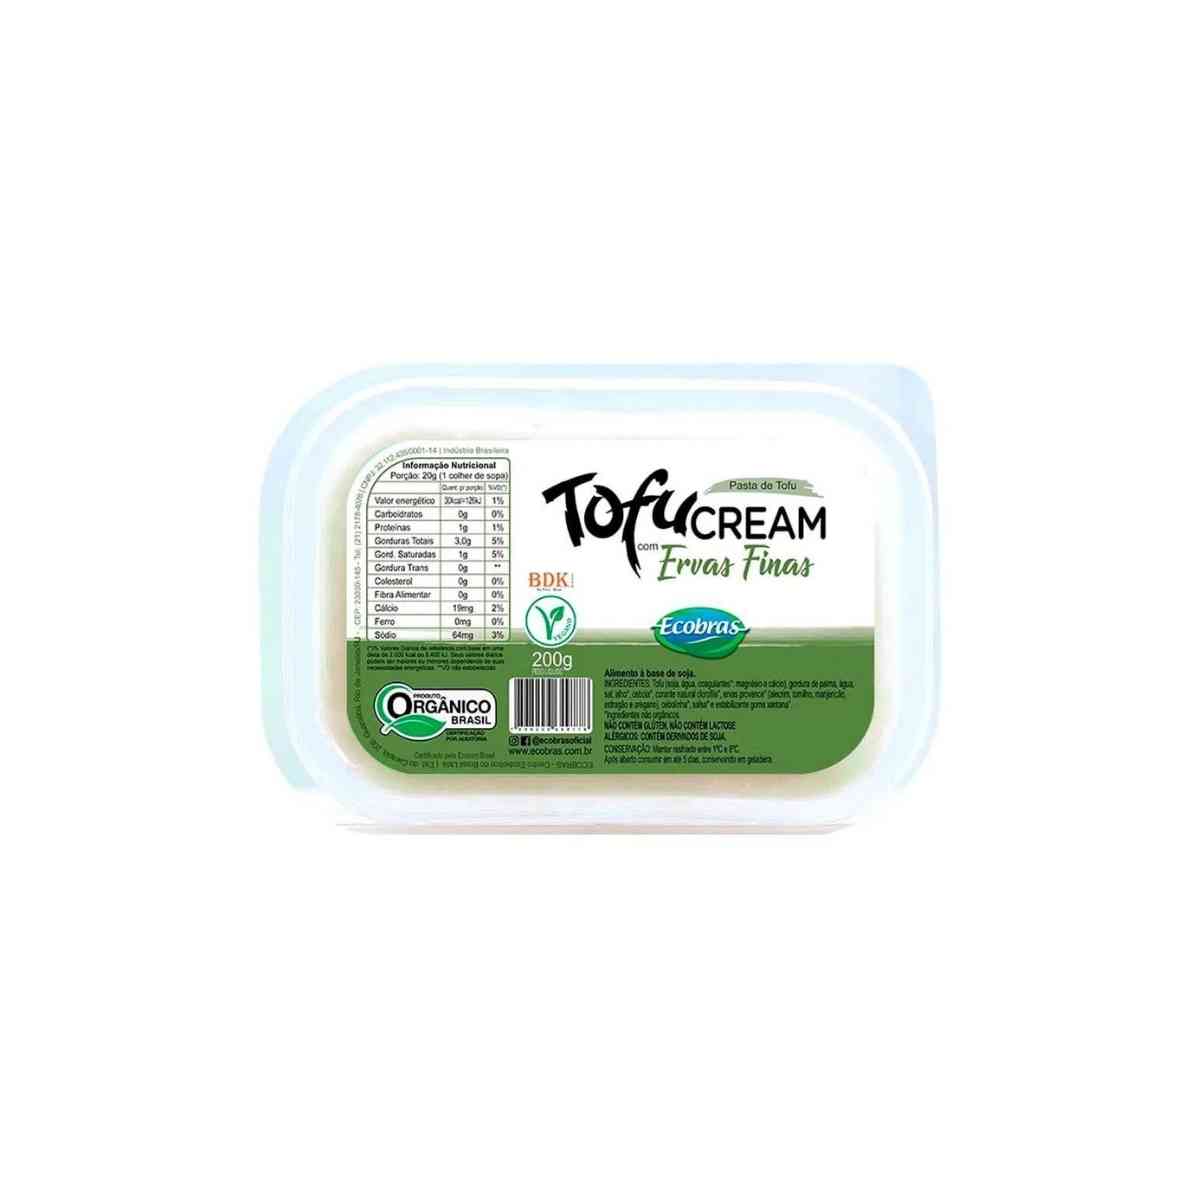 tofu-cream-ervas-finas-organico-200-g-1.jpg